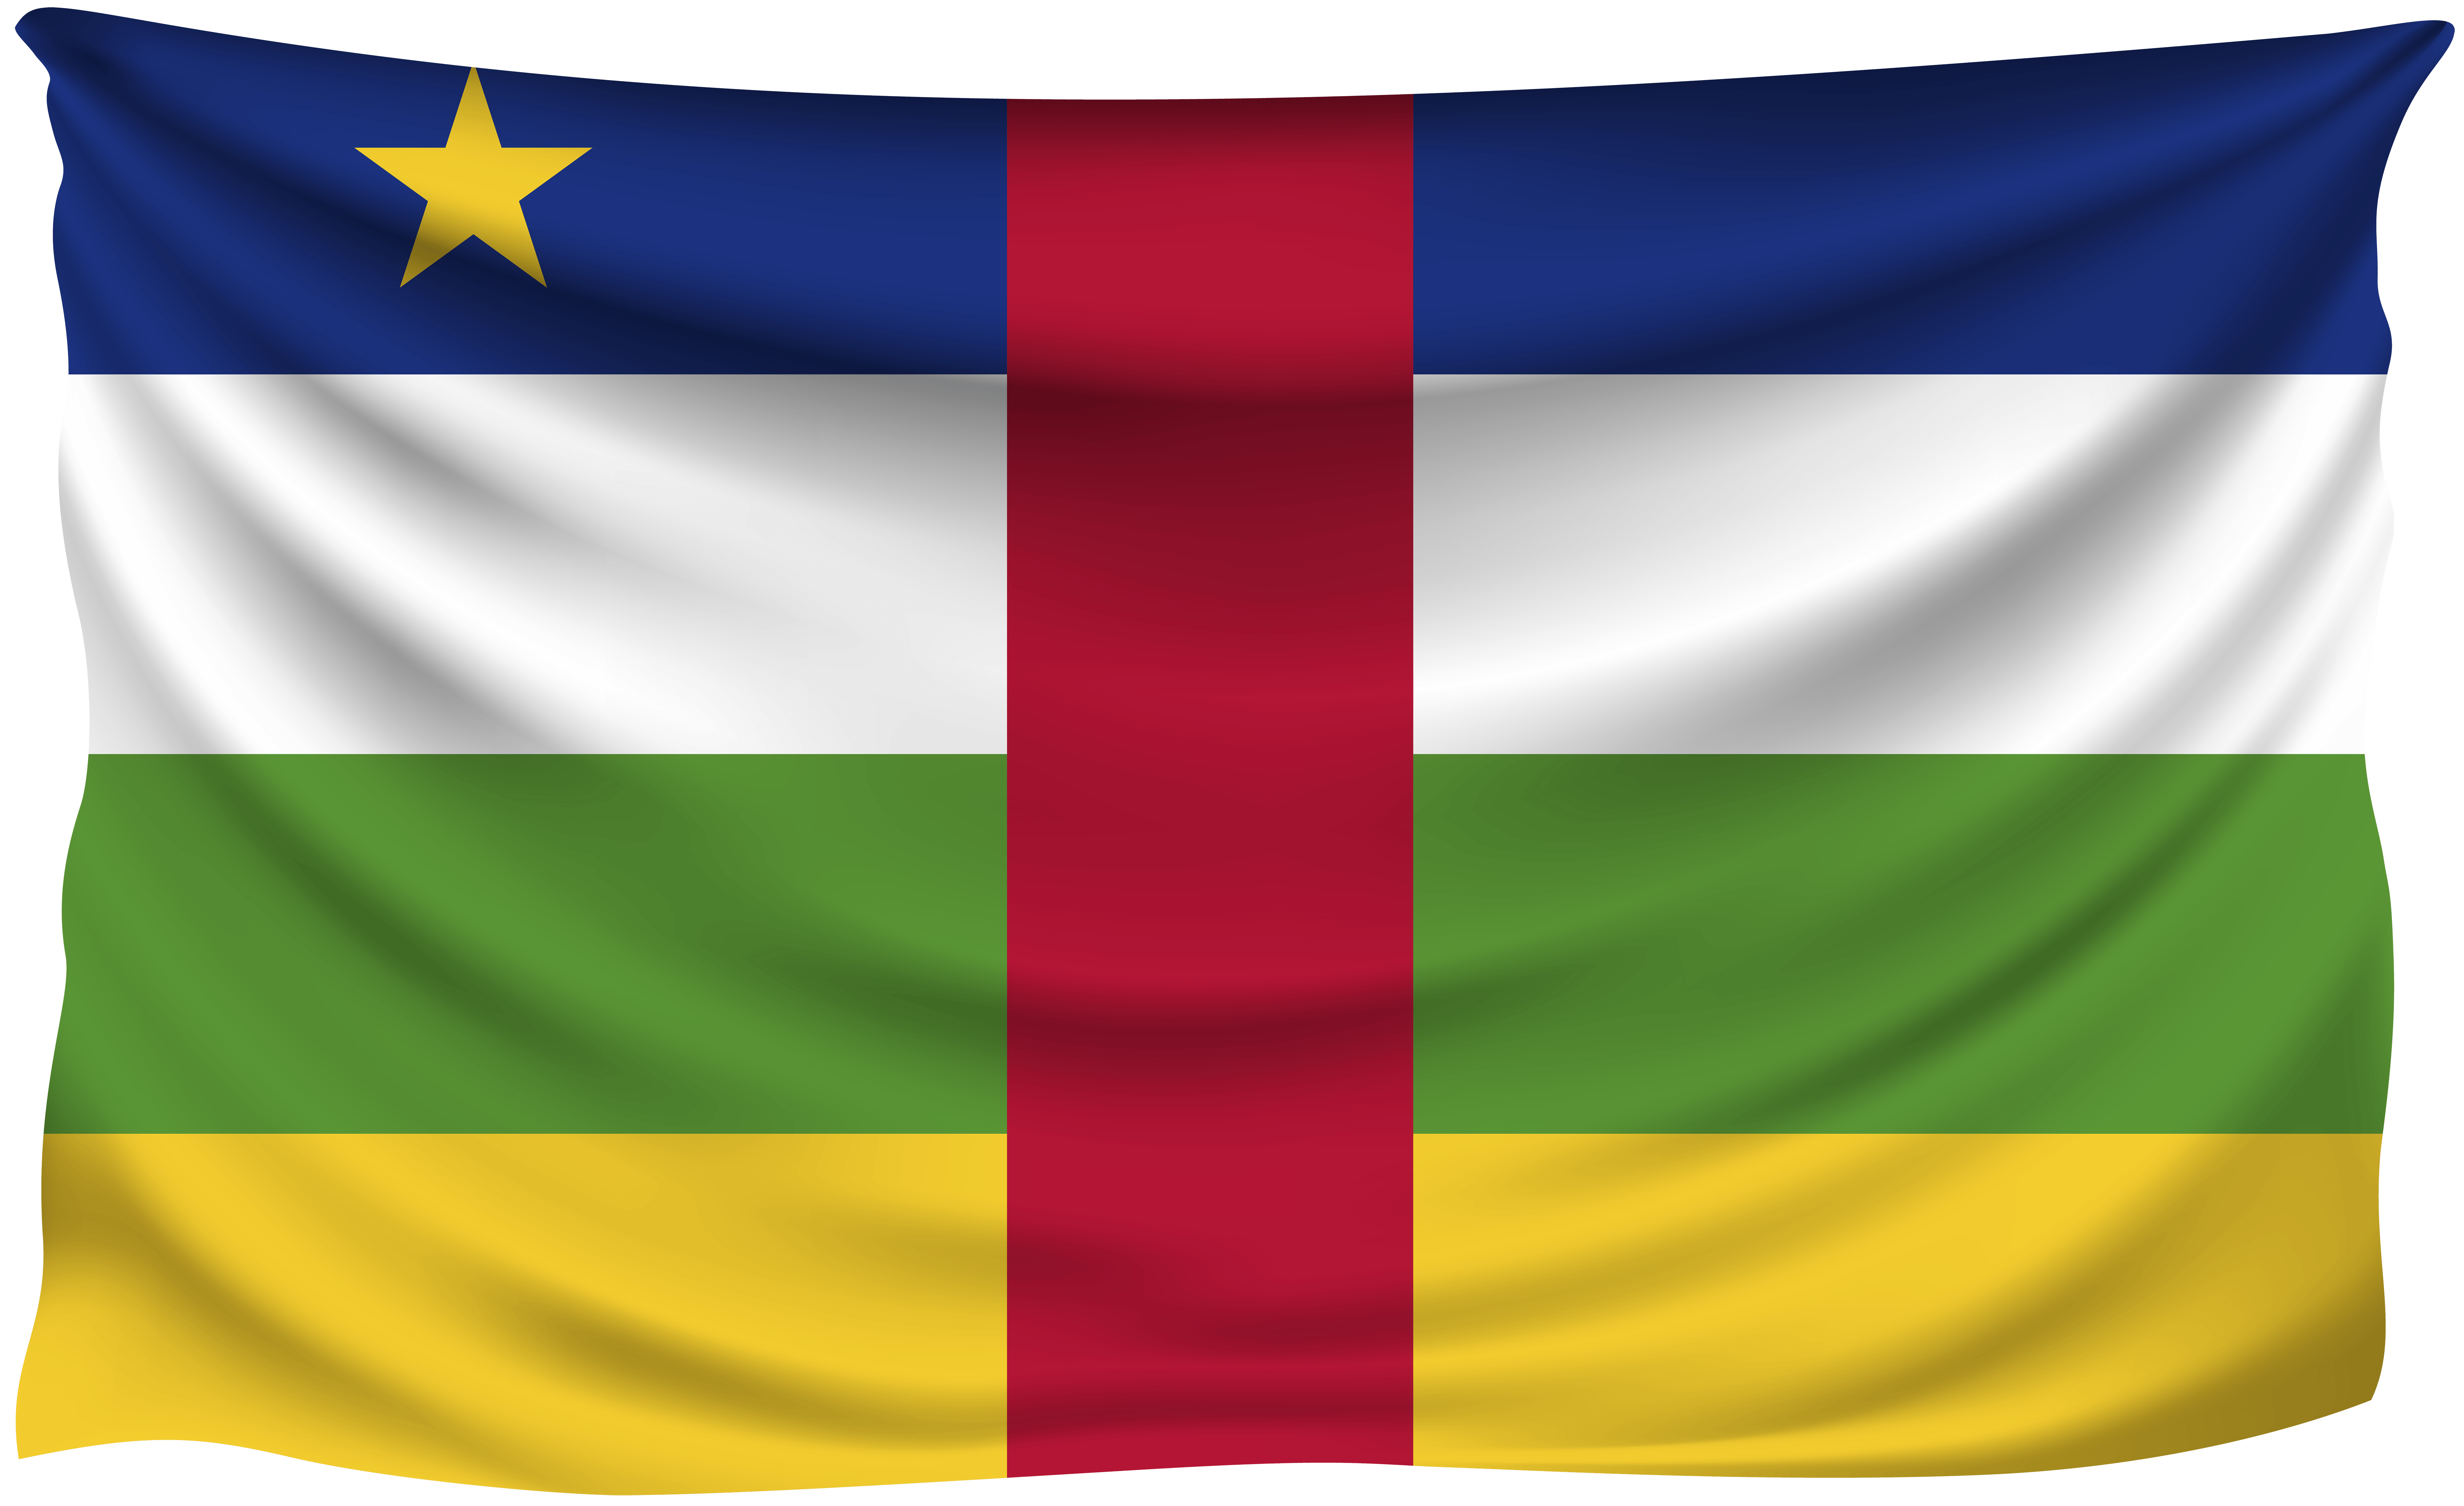 Central African Republic Wrinkled Flag